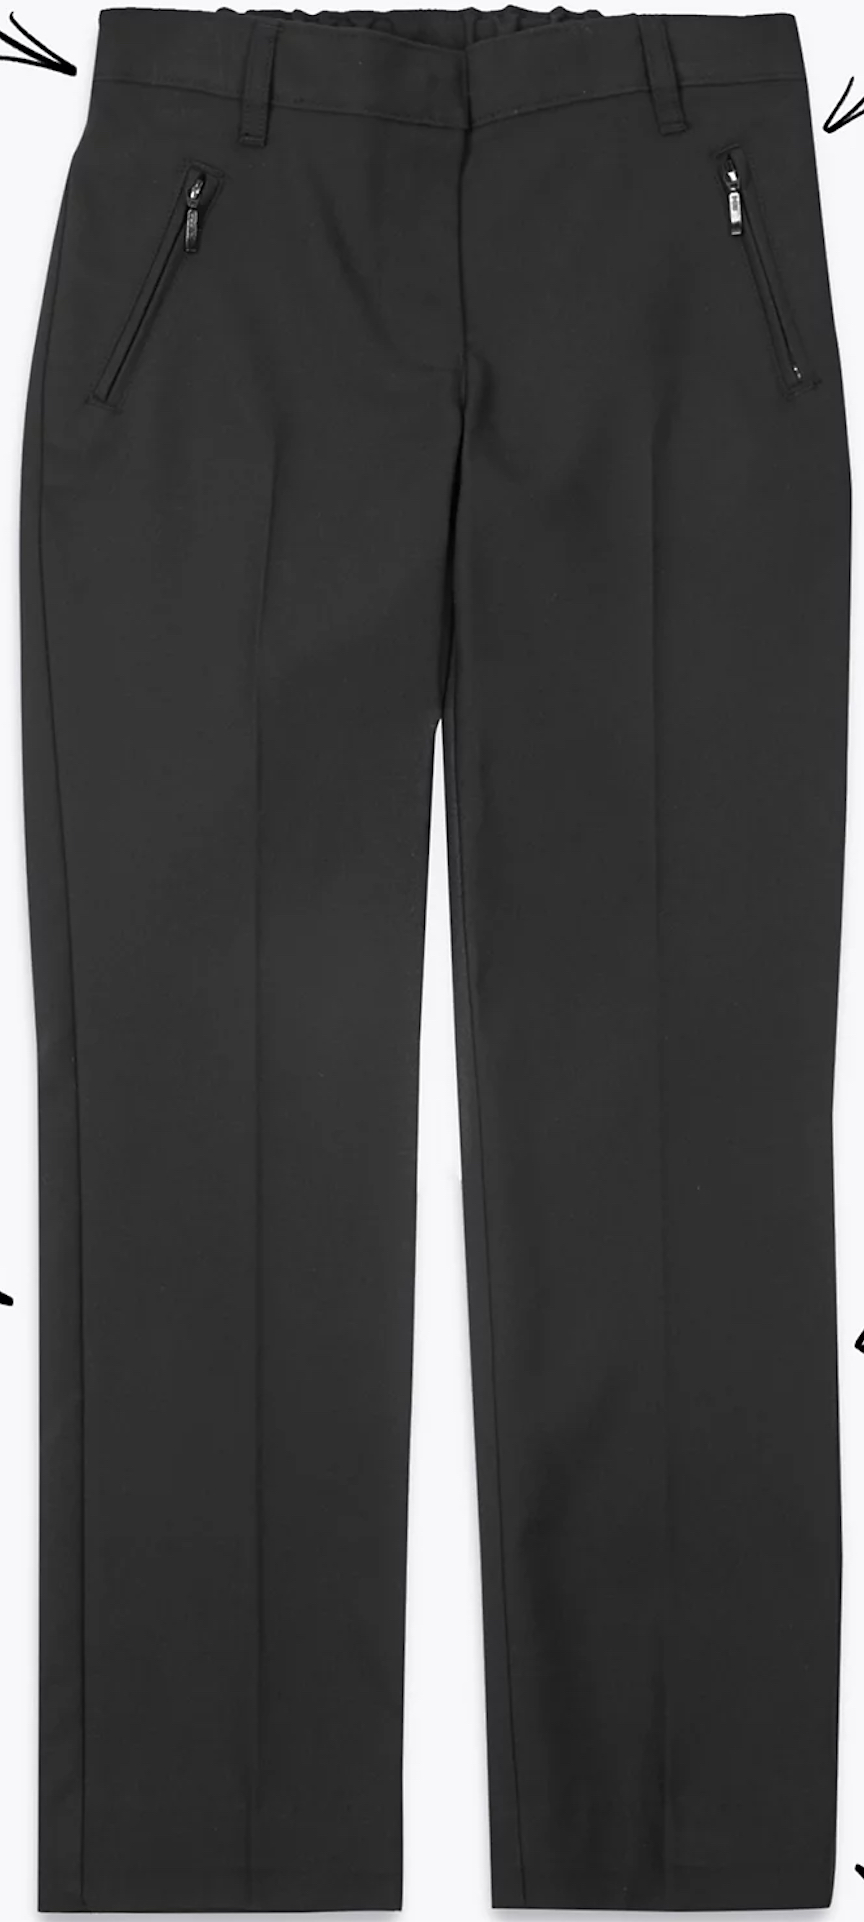 Girls' Grey Trousers, Adjustable Waist, Mock Fly, Zipped Pockets 5-6 Y